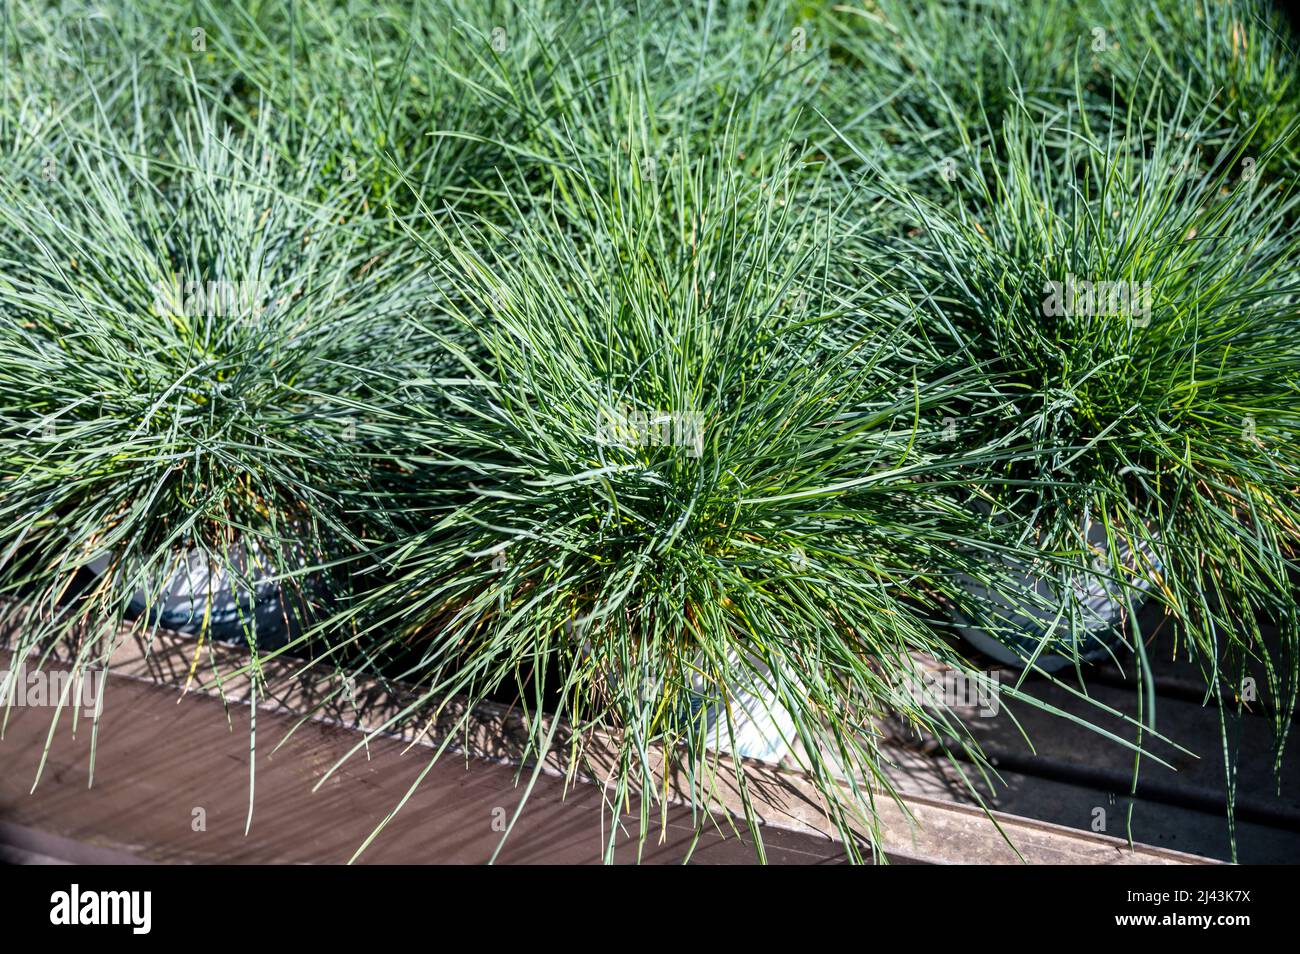 Round garden grass plant festuca gautieri for sale in garden shop Stock Photo